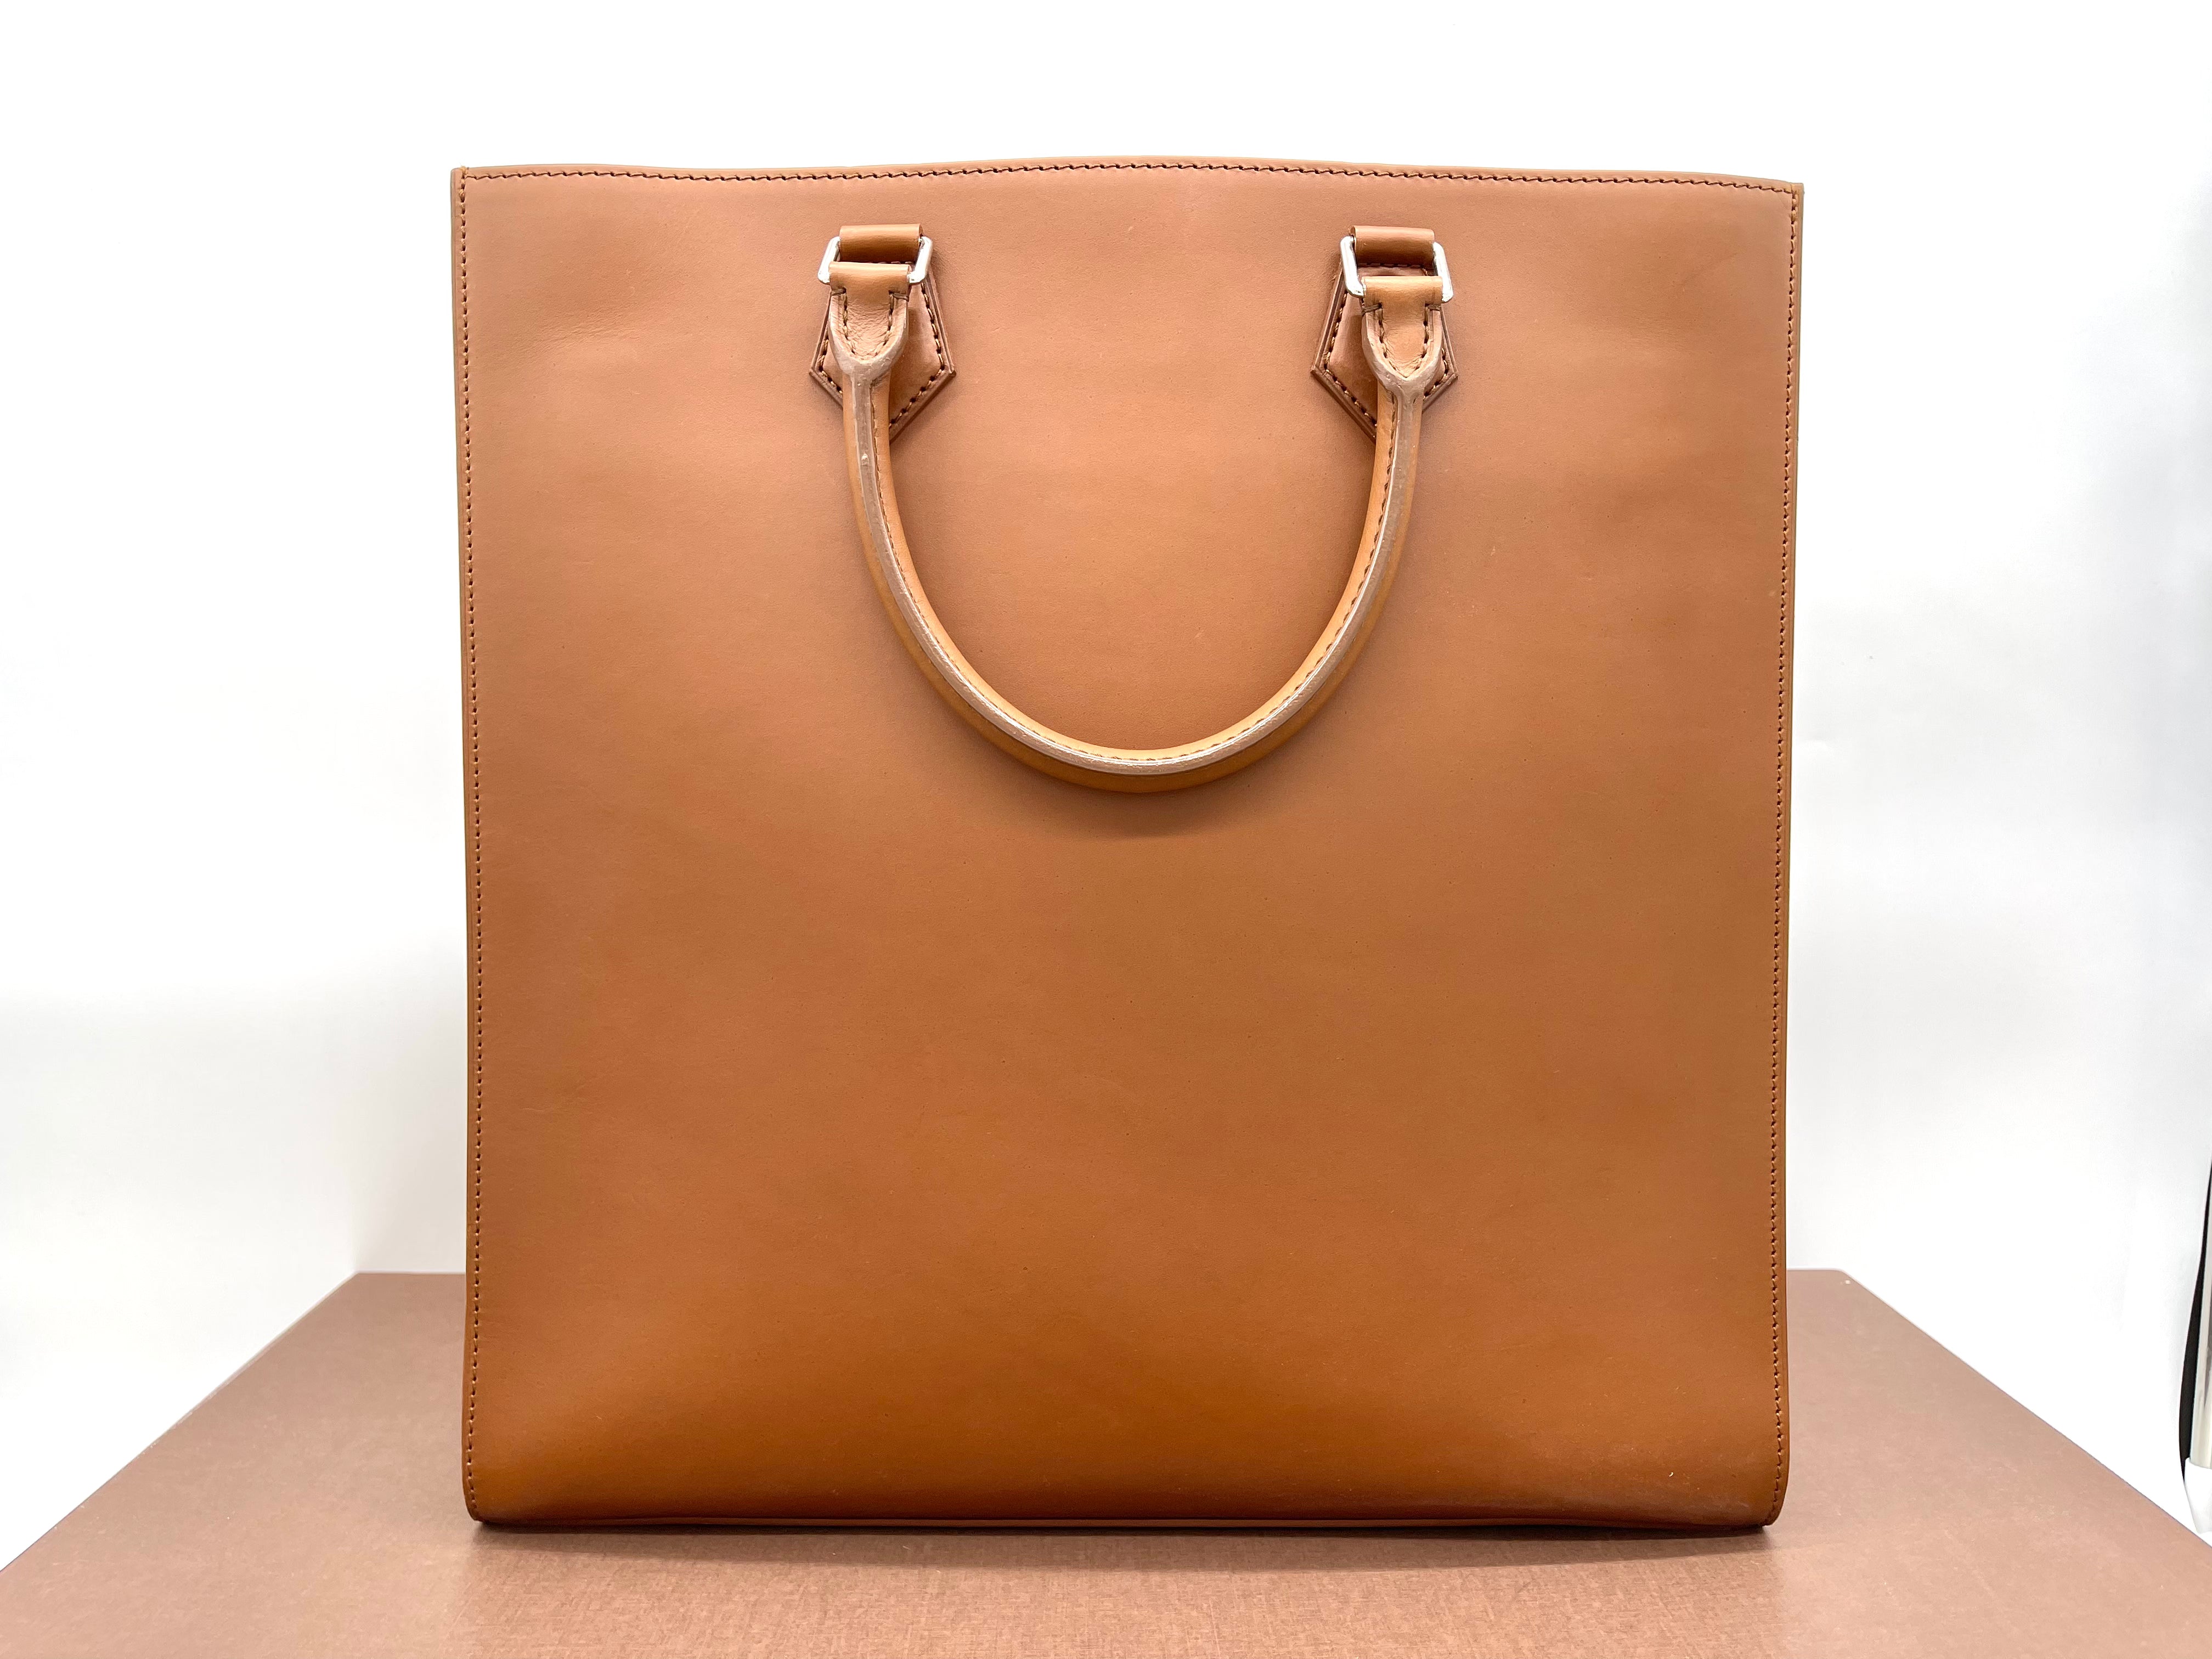 brand new louis vuitton handbags